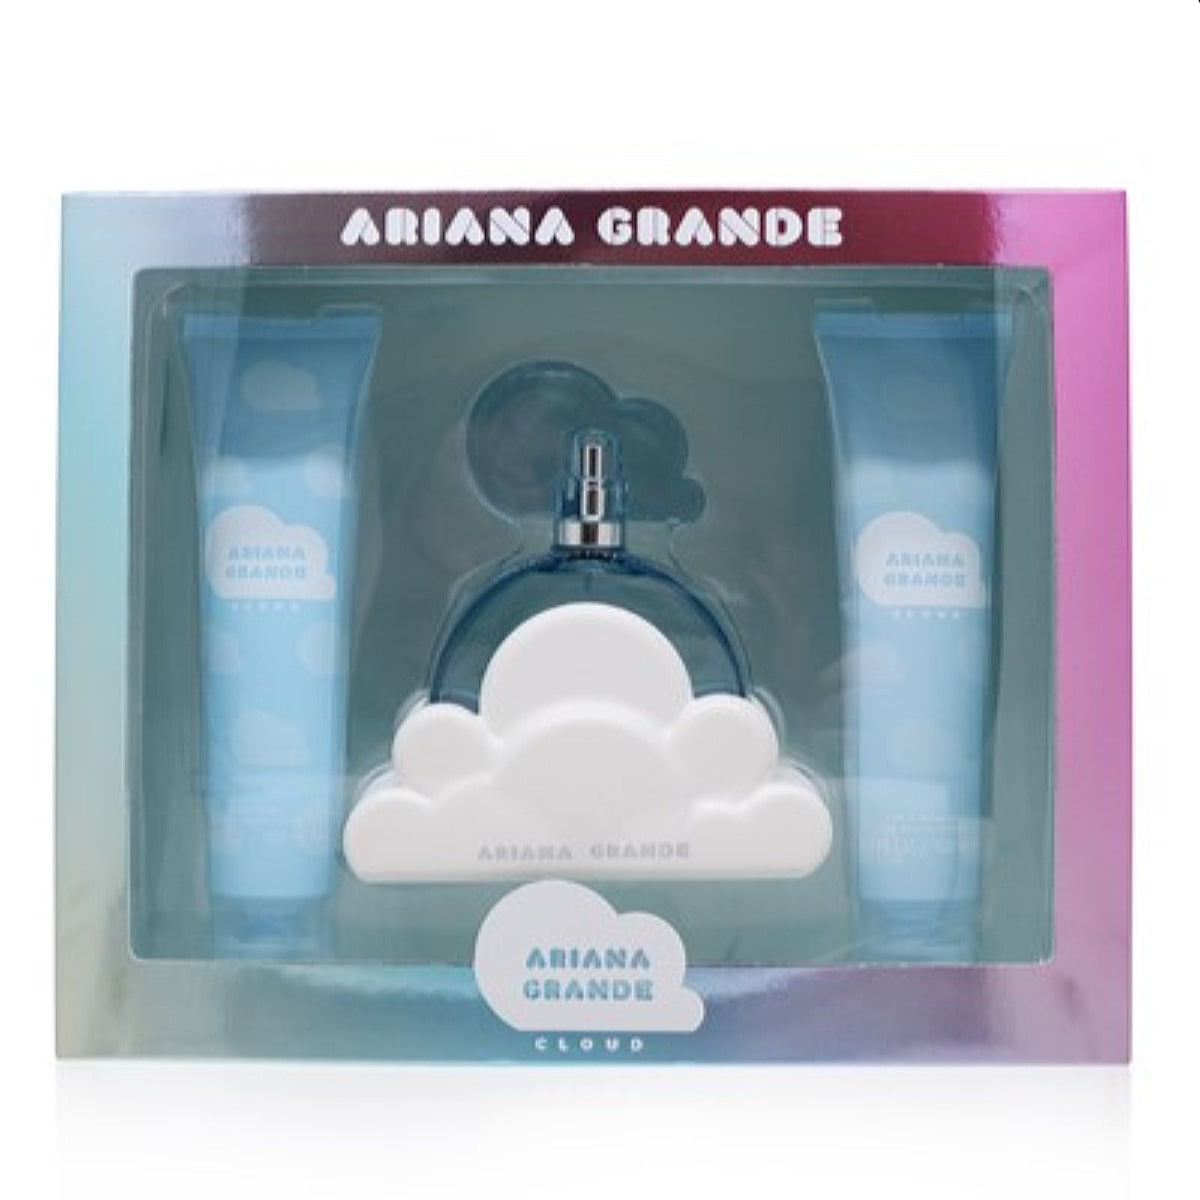 Ariana Grande Cloud Ariana Grande Set For Women  ARG4LP21534GSW